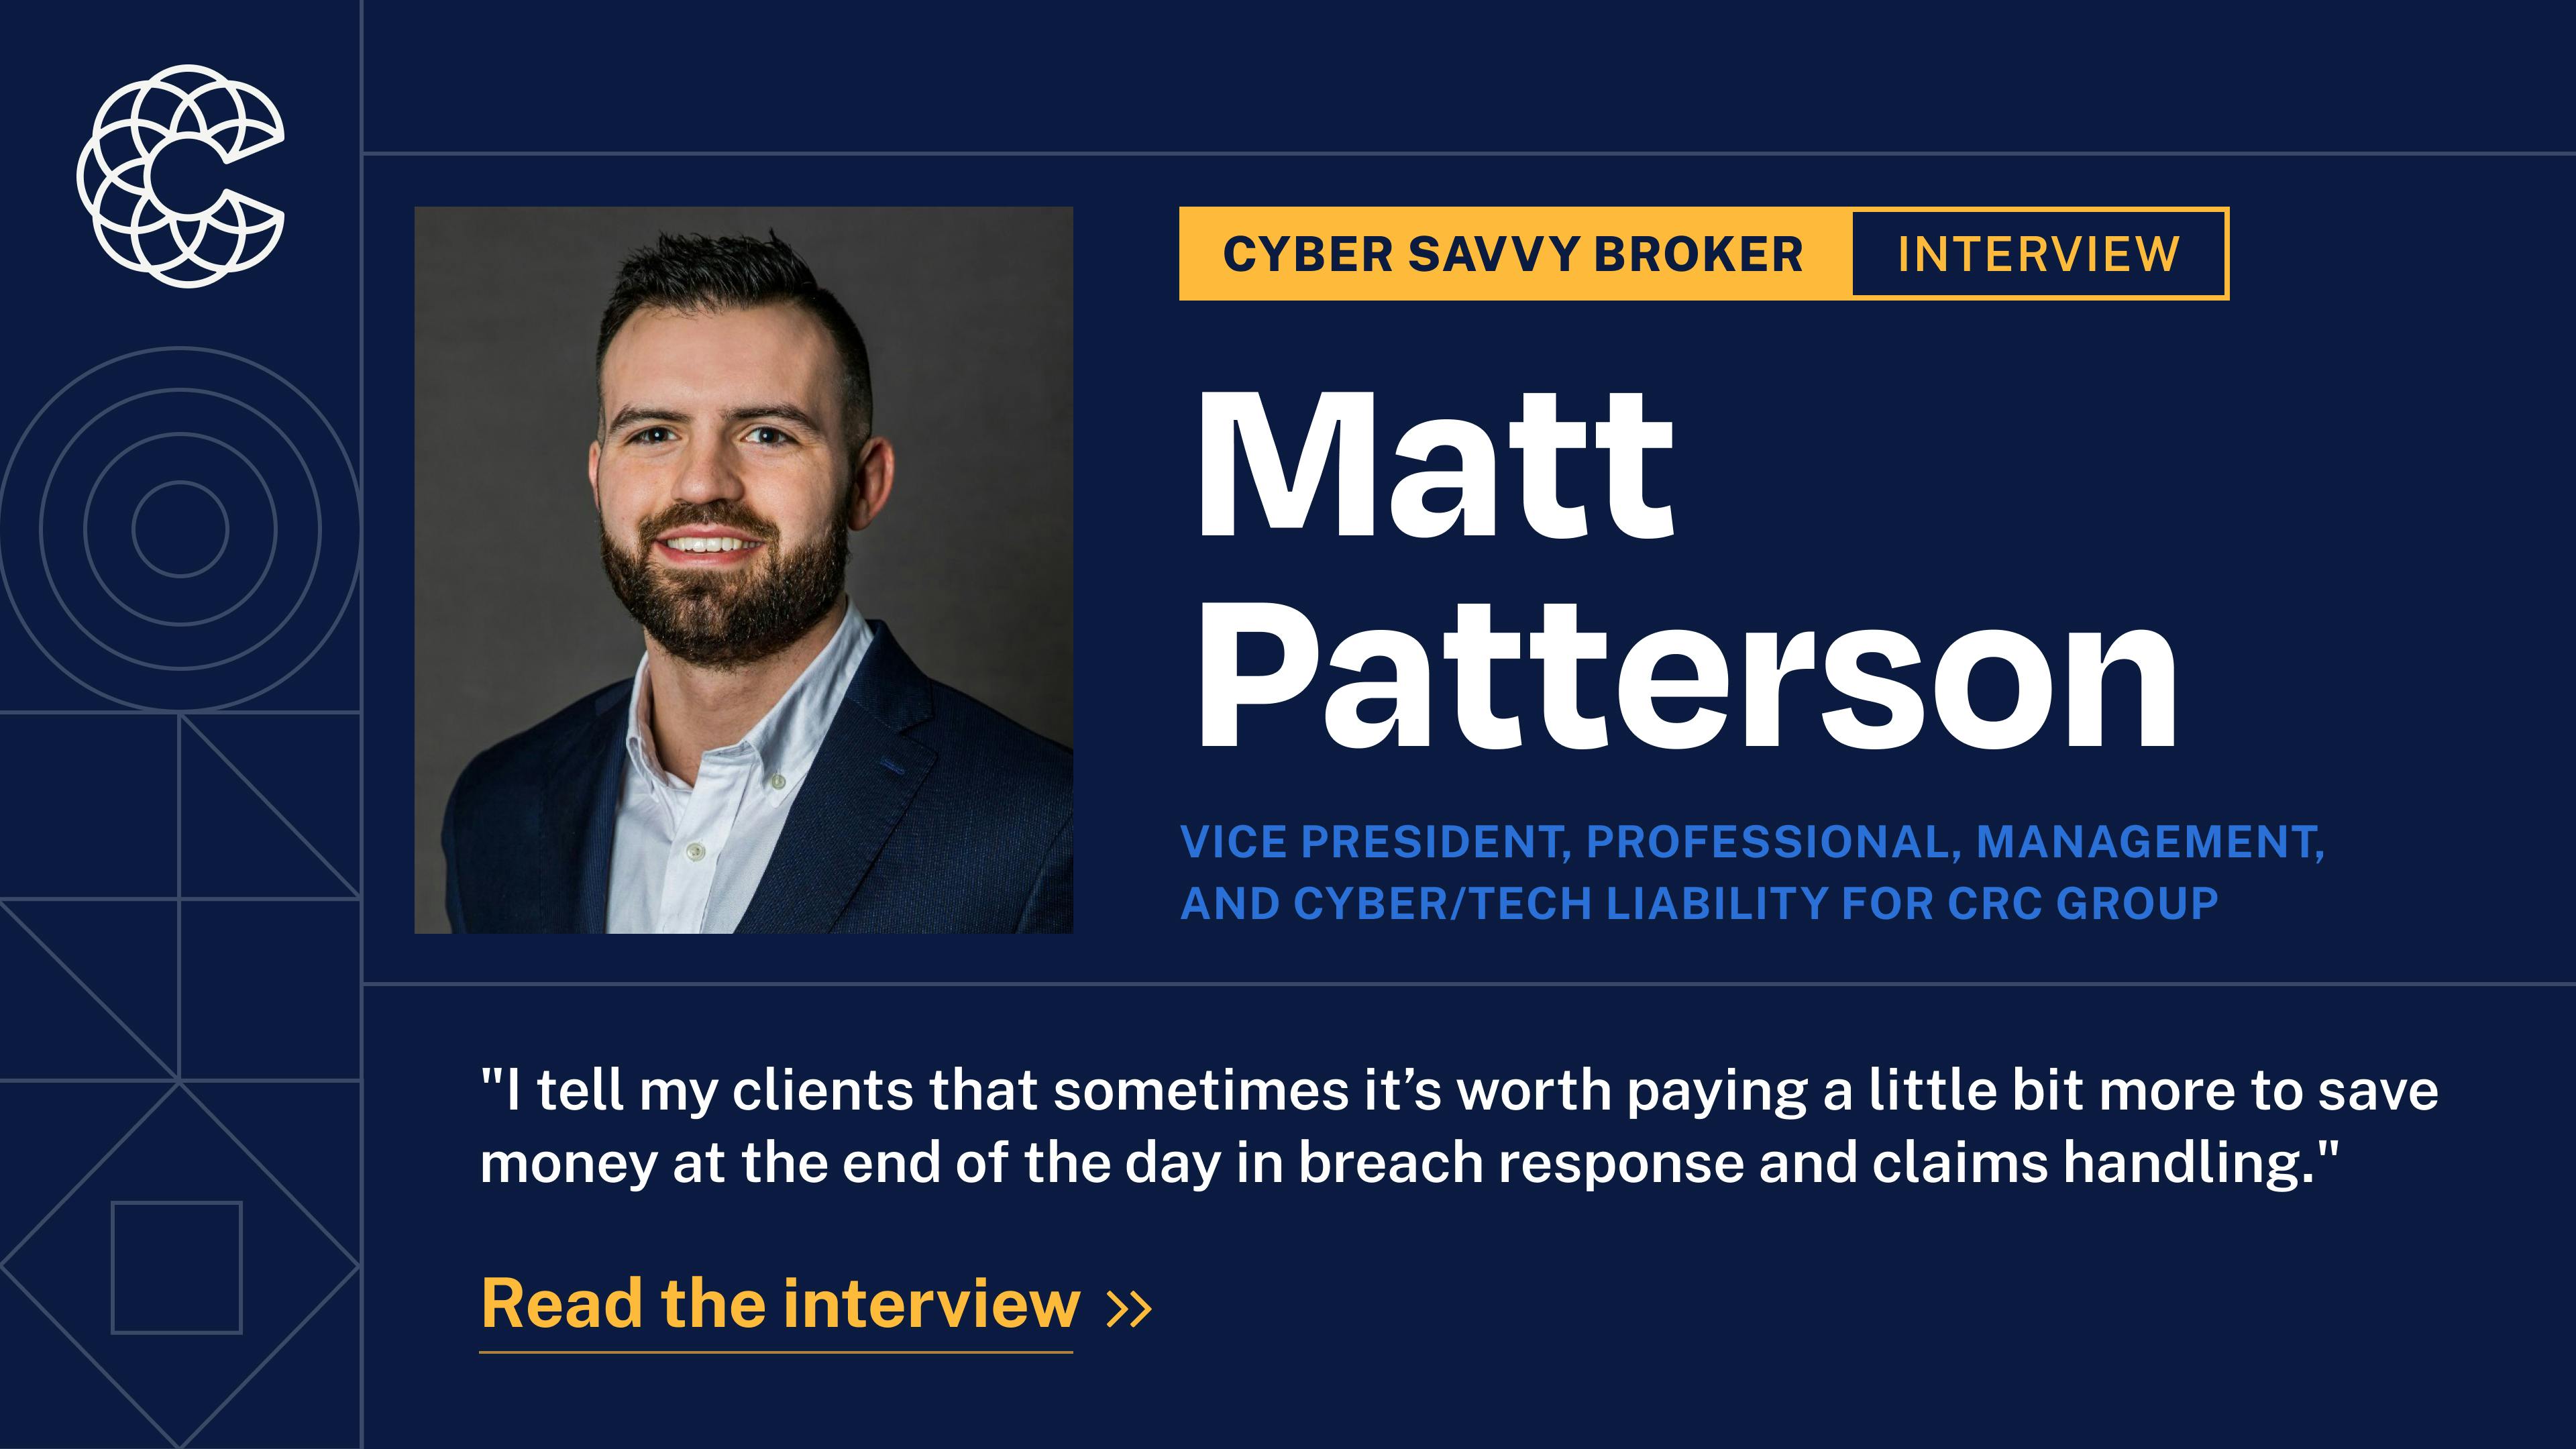 Cyber Savvy Broker Matt Patterson